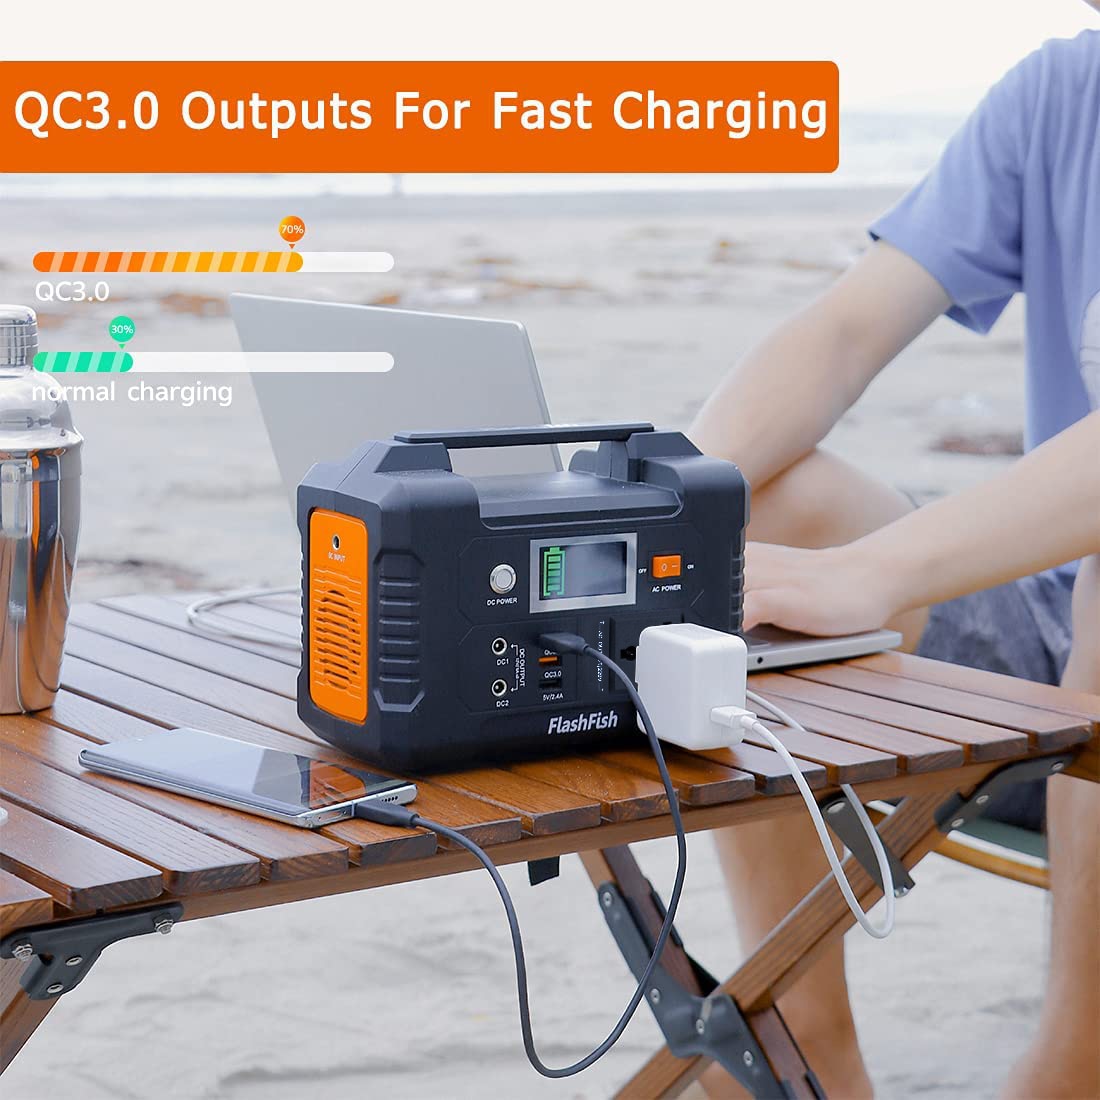 FF Flashfish E200, QC3.0 Outputs For Fast Charging 0C